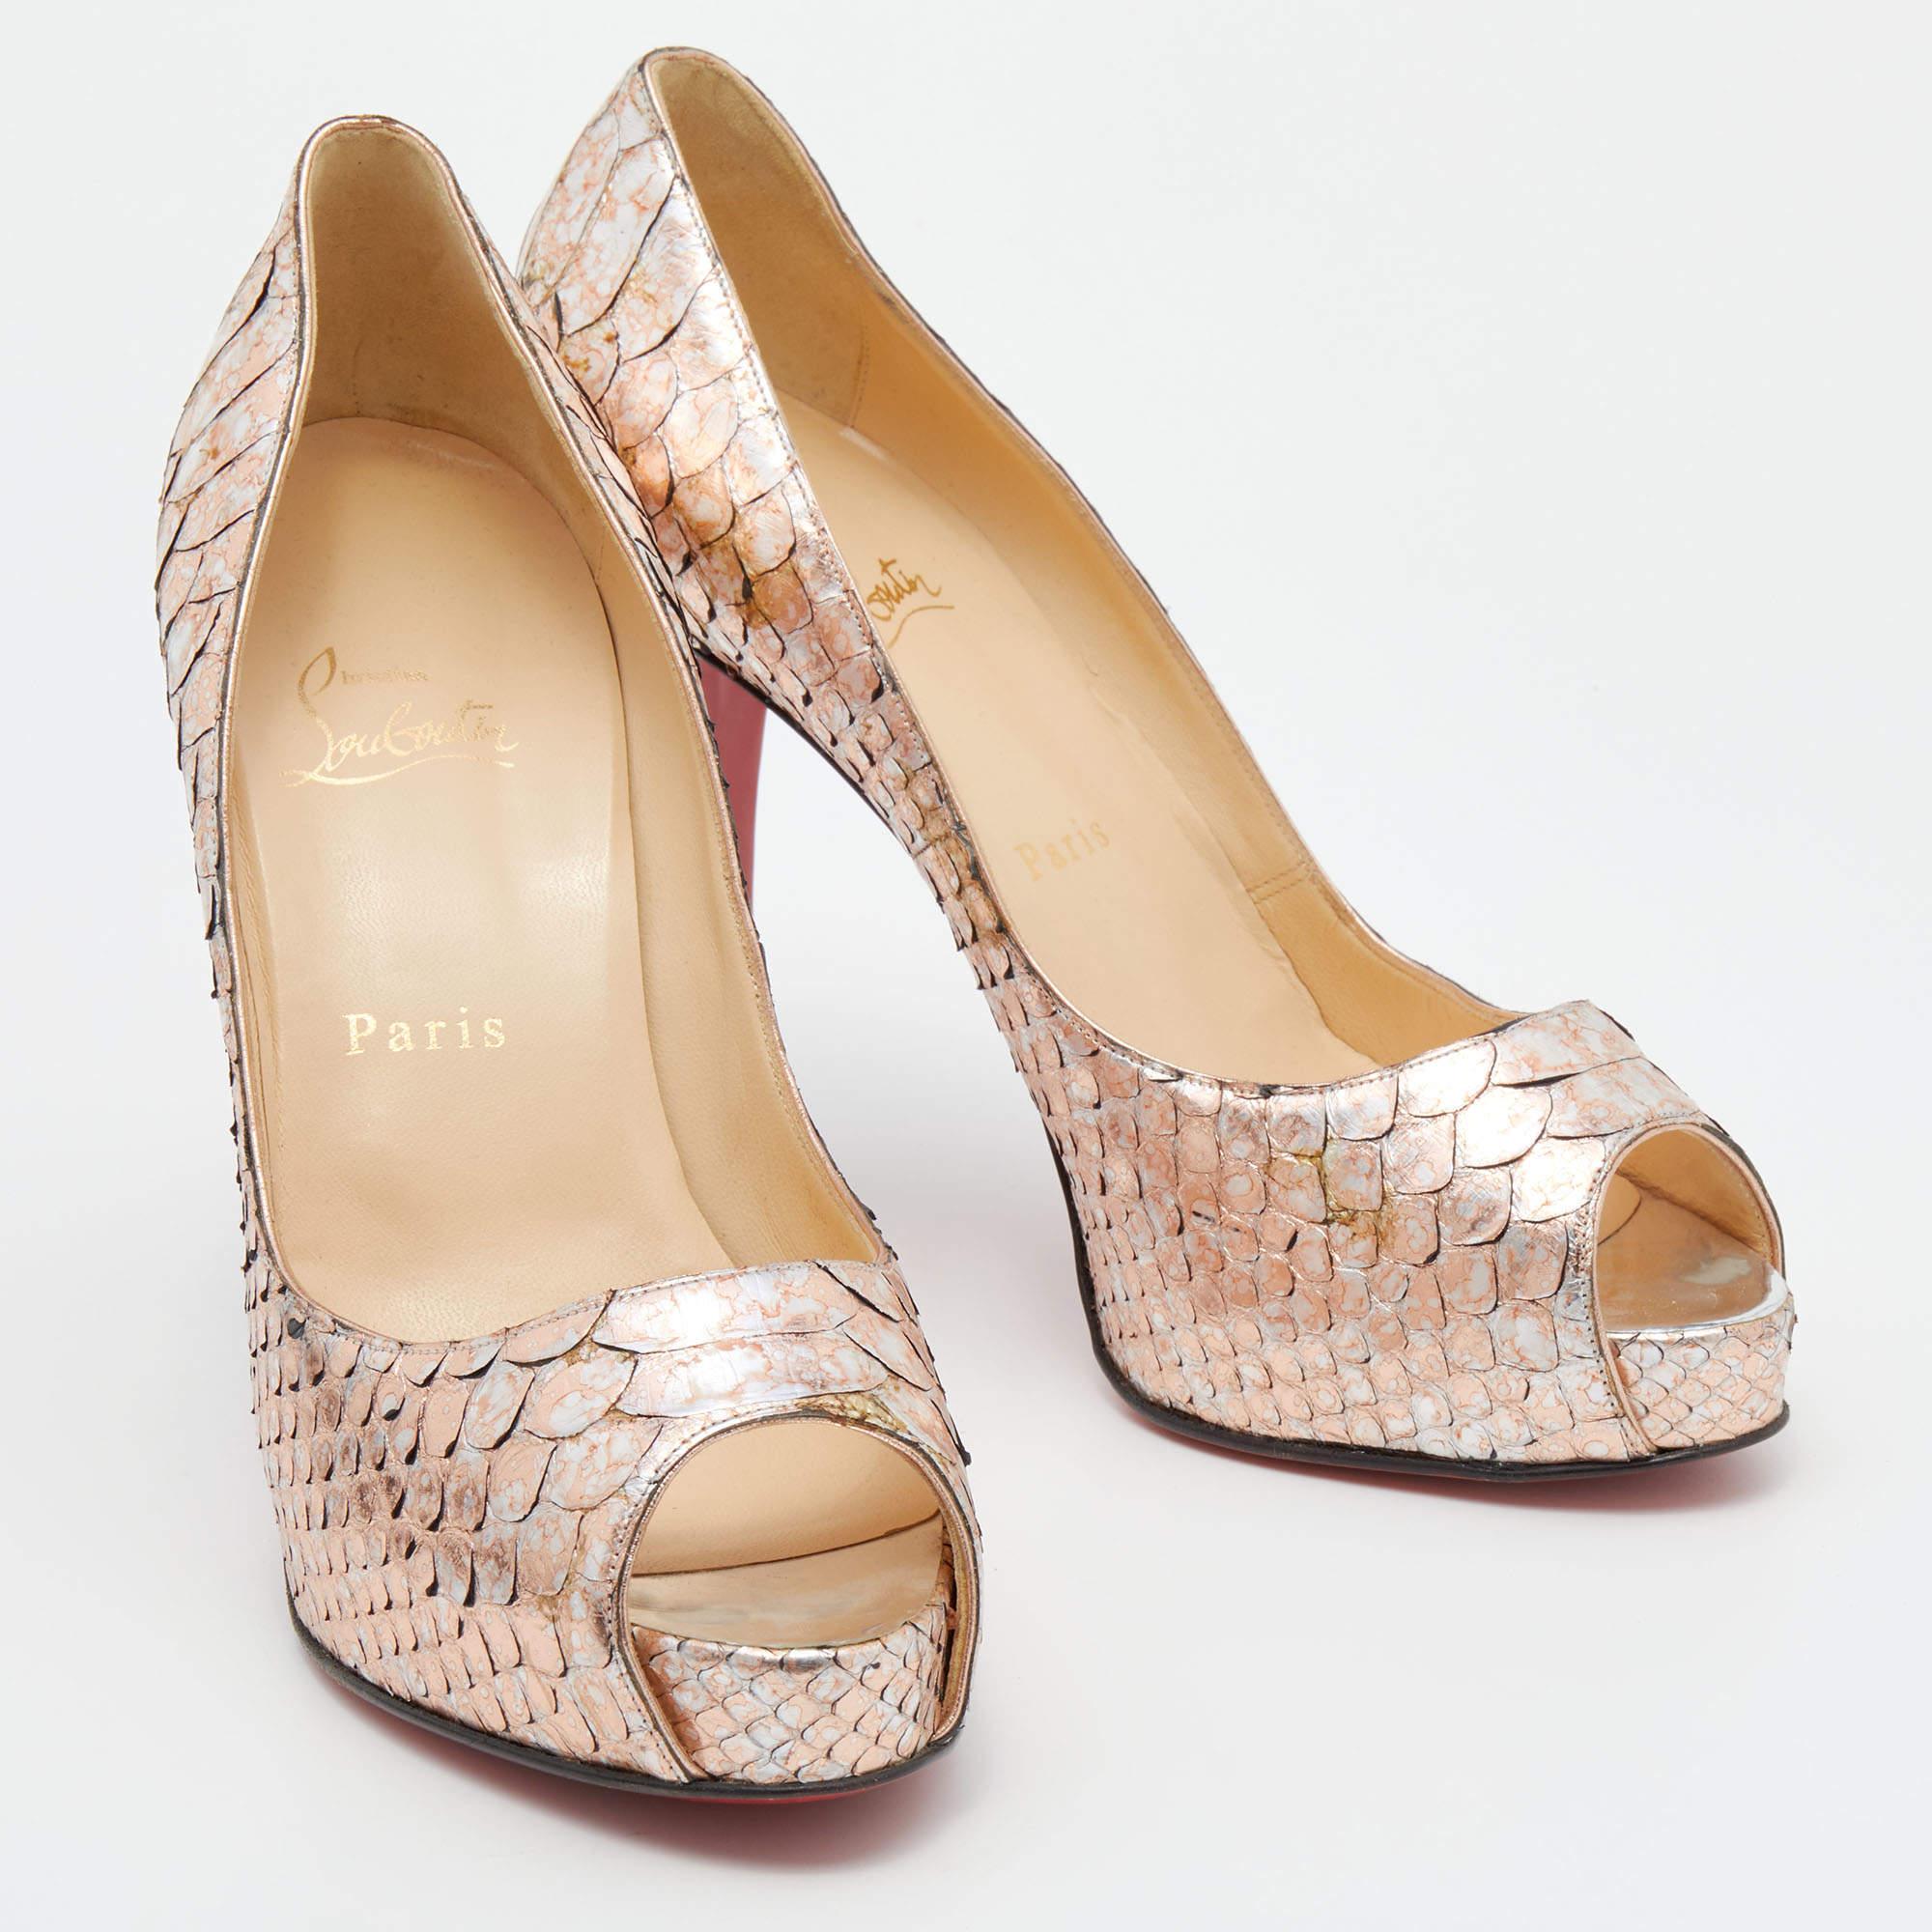 Women's Christian Louboutin Metallic Rose Gold Python Very Prive Peep Toe Pumps Size 38. For Sale